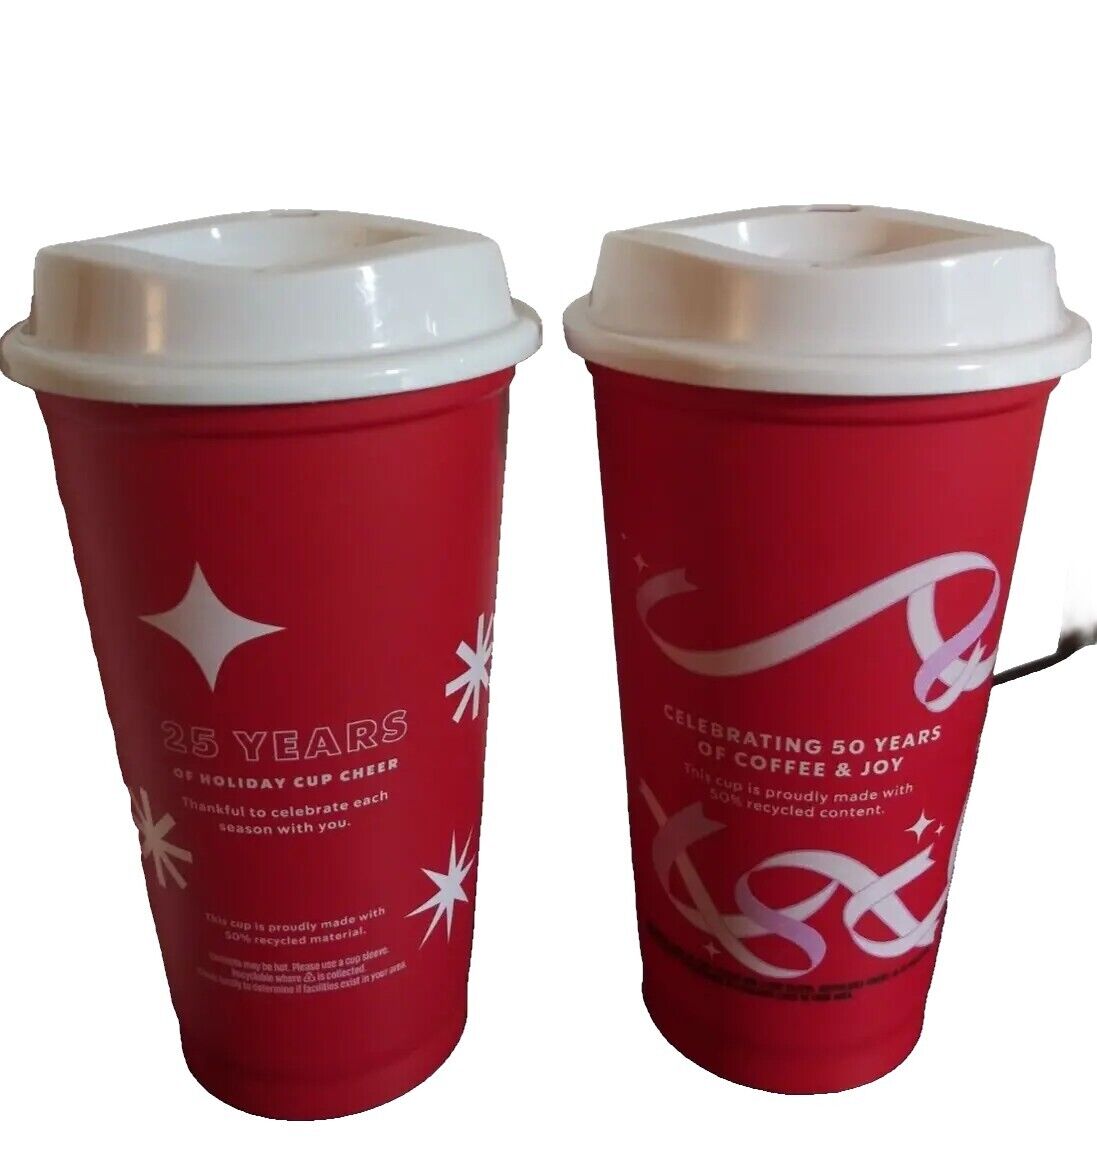 2 Starbucks Coffee Cups 25 Years Holiday Cheer & 50 Years Coffee & Joy REUSEABLE